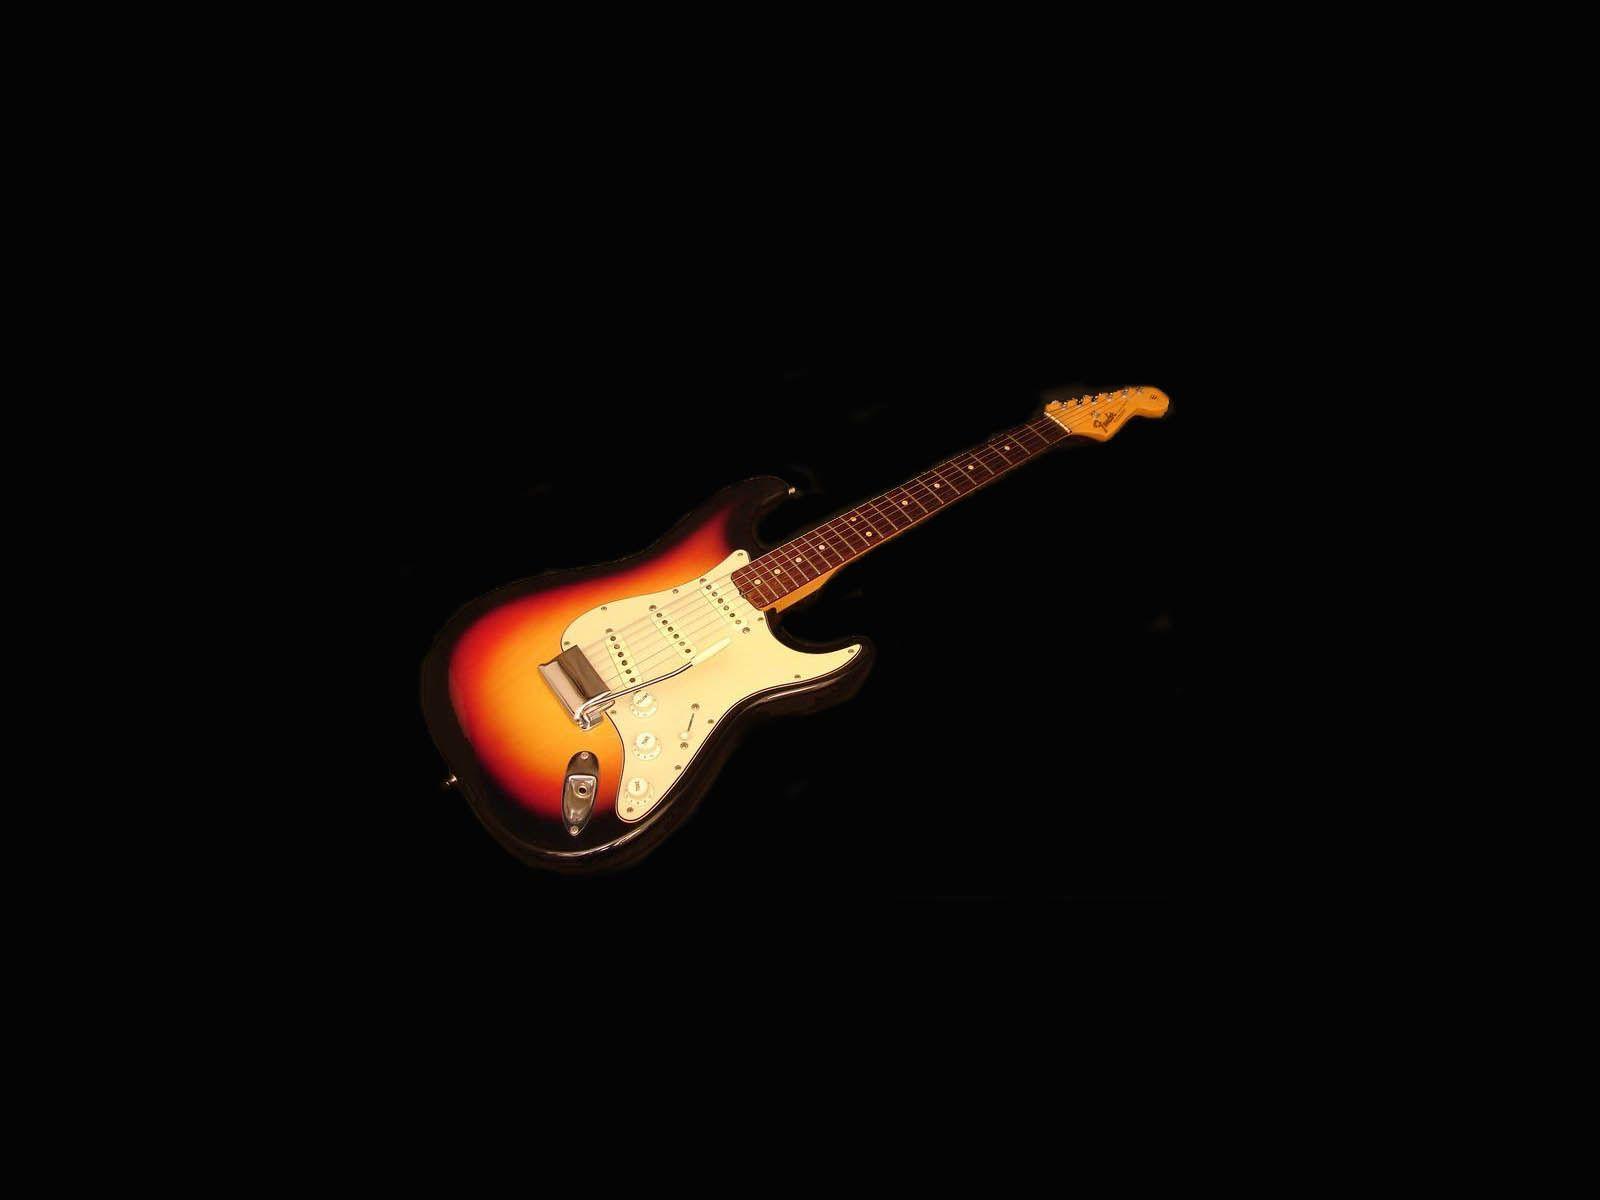 Guitar Fender Stratocaster Black Wallpaper HD Wallpaper. Fender stratocaster, Fender guitars stratocaster, Black wallpaper